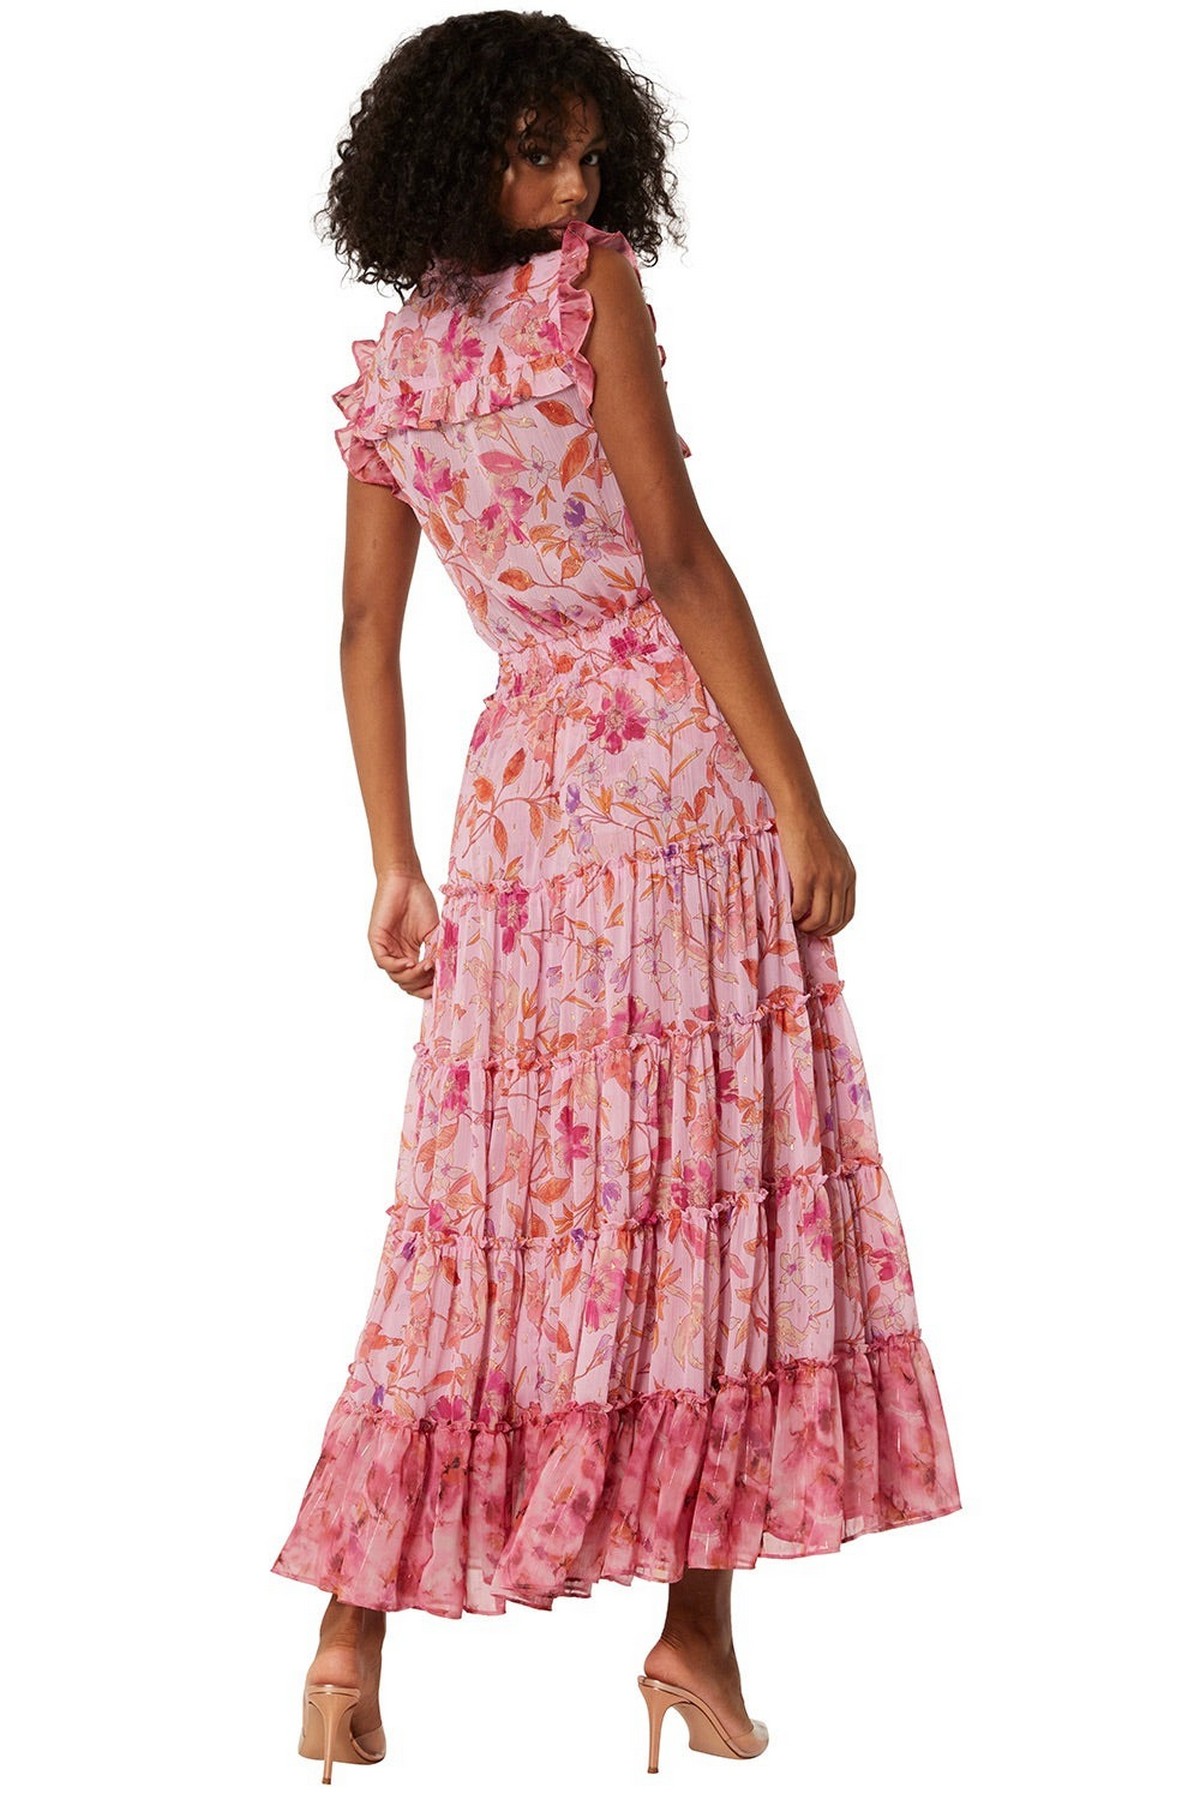 Misa - Trina Dress - Fire F - Kleed lang polokraag mouwloos roze lila